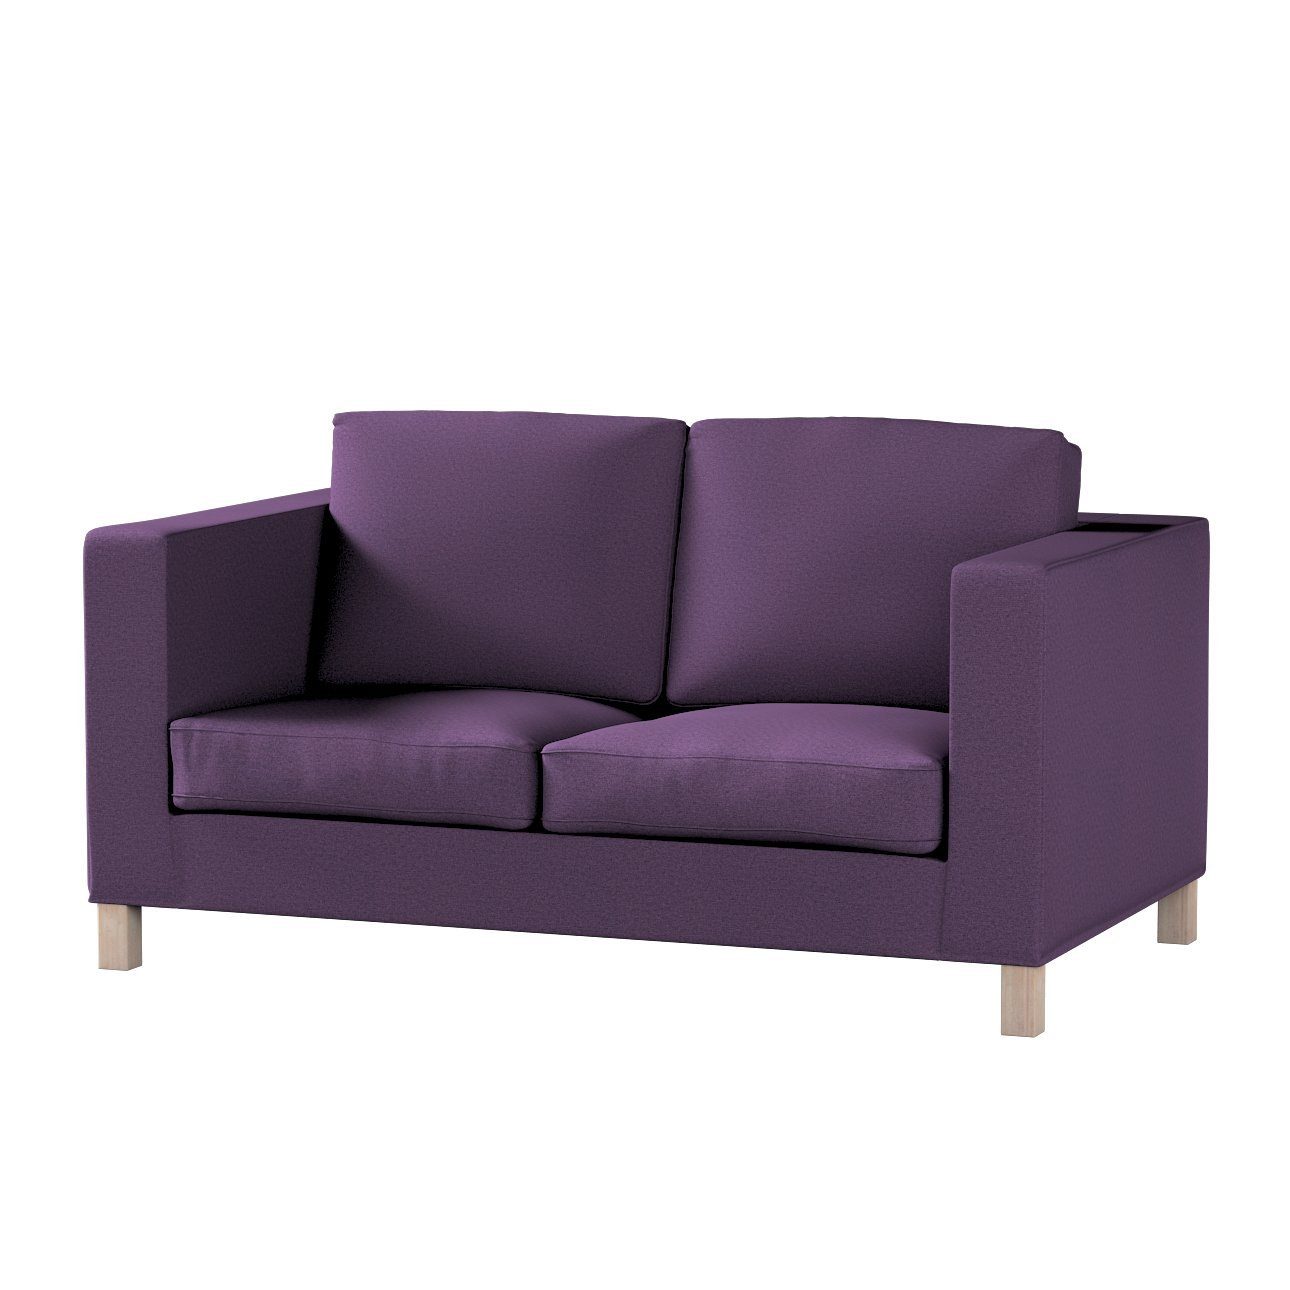 Sofahusse Karlanda 2-Sitzer Sofa nicht ausklappbar kurz, Etna, Dekoria violett